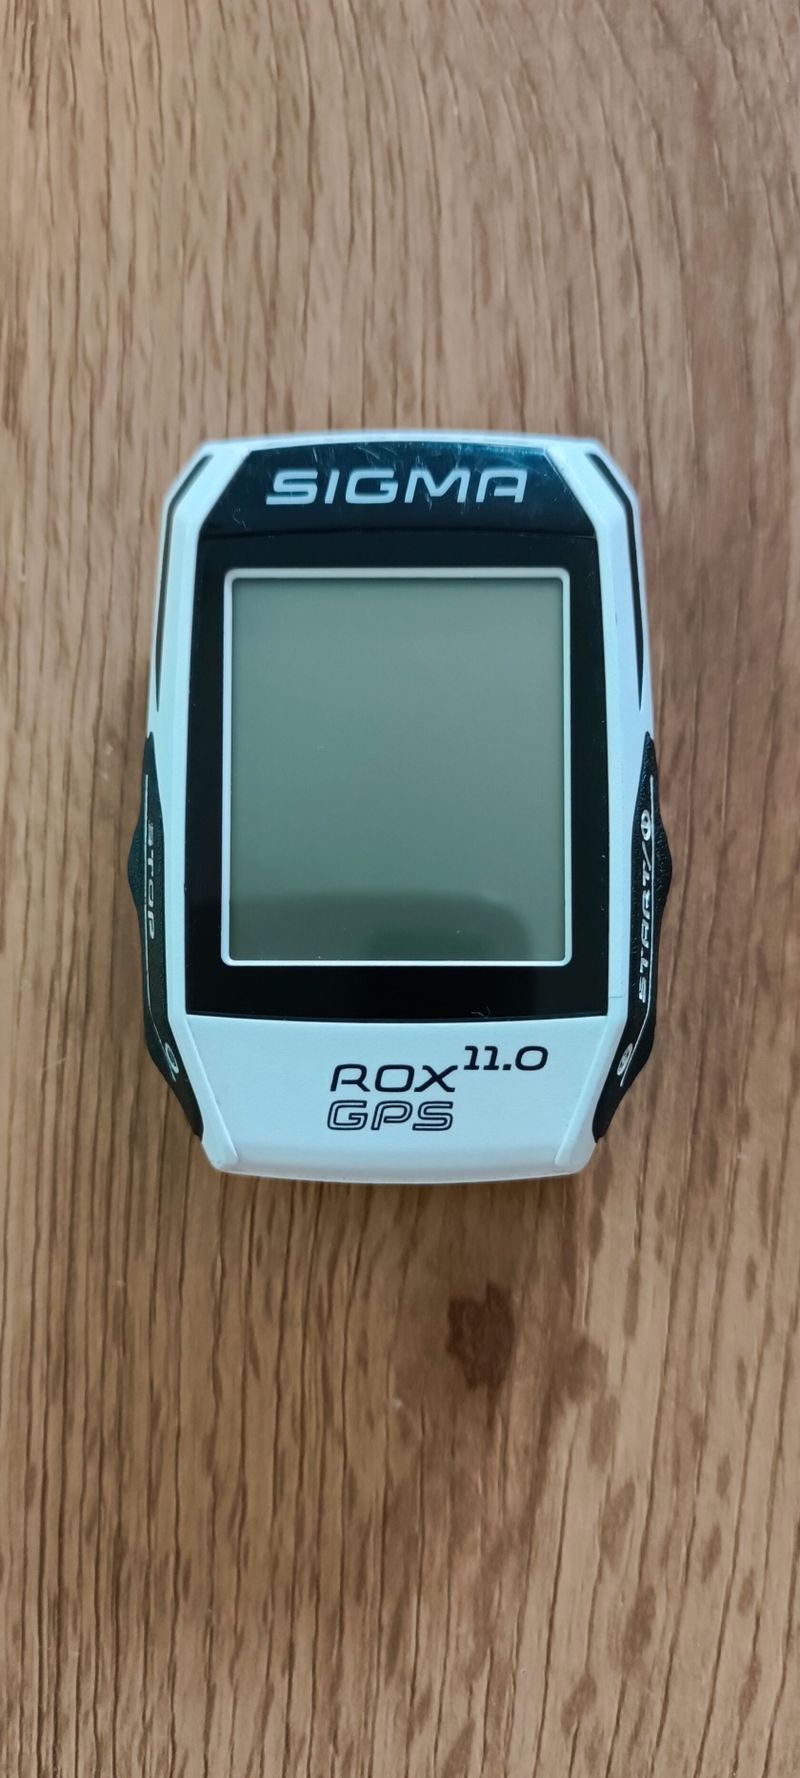 Sigma rox 11.0